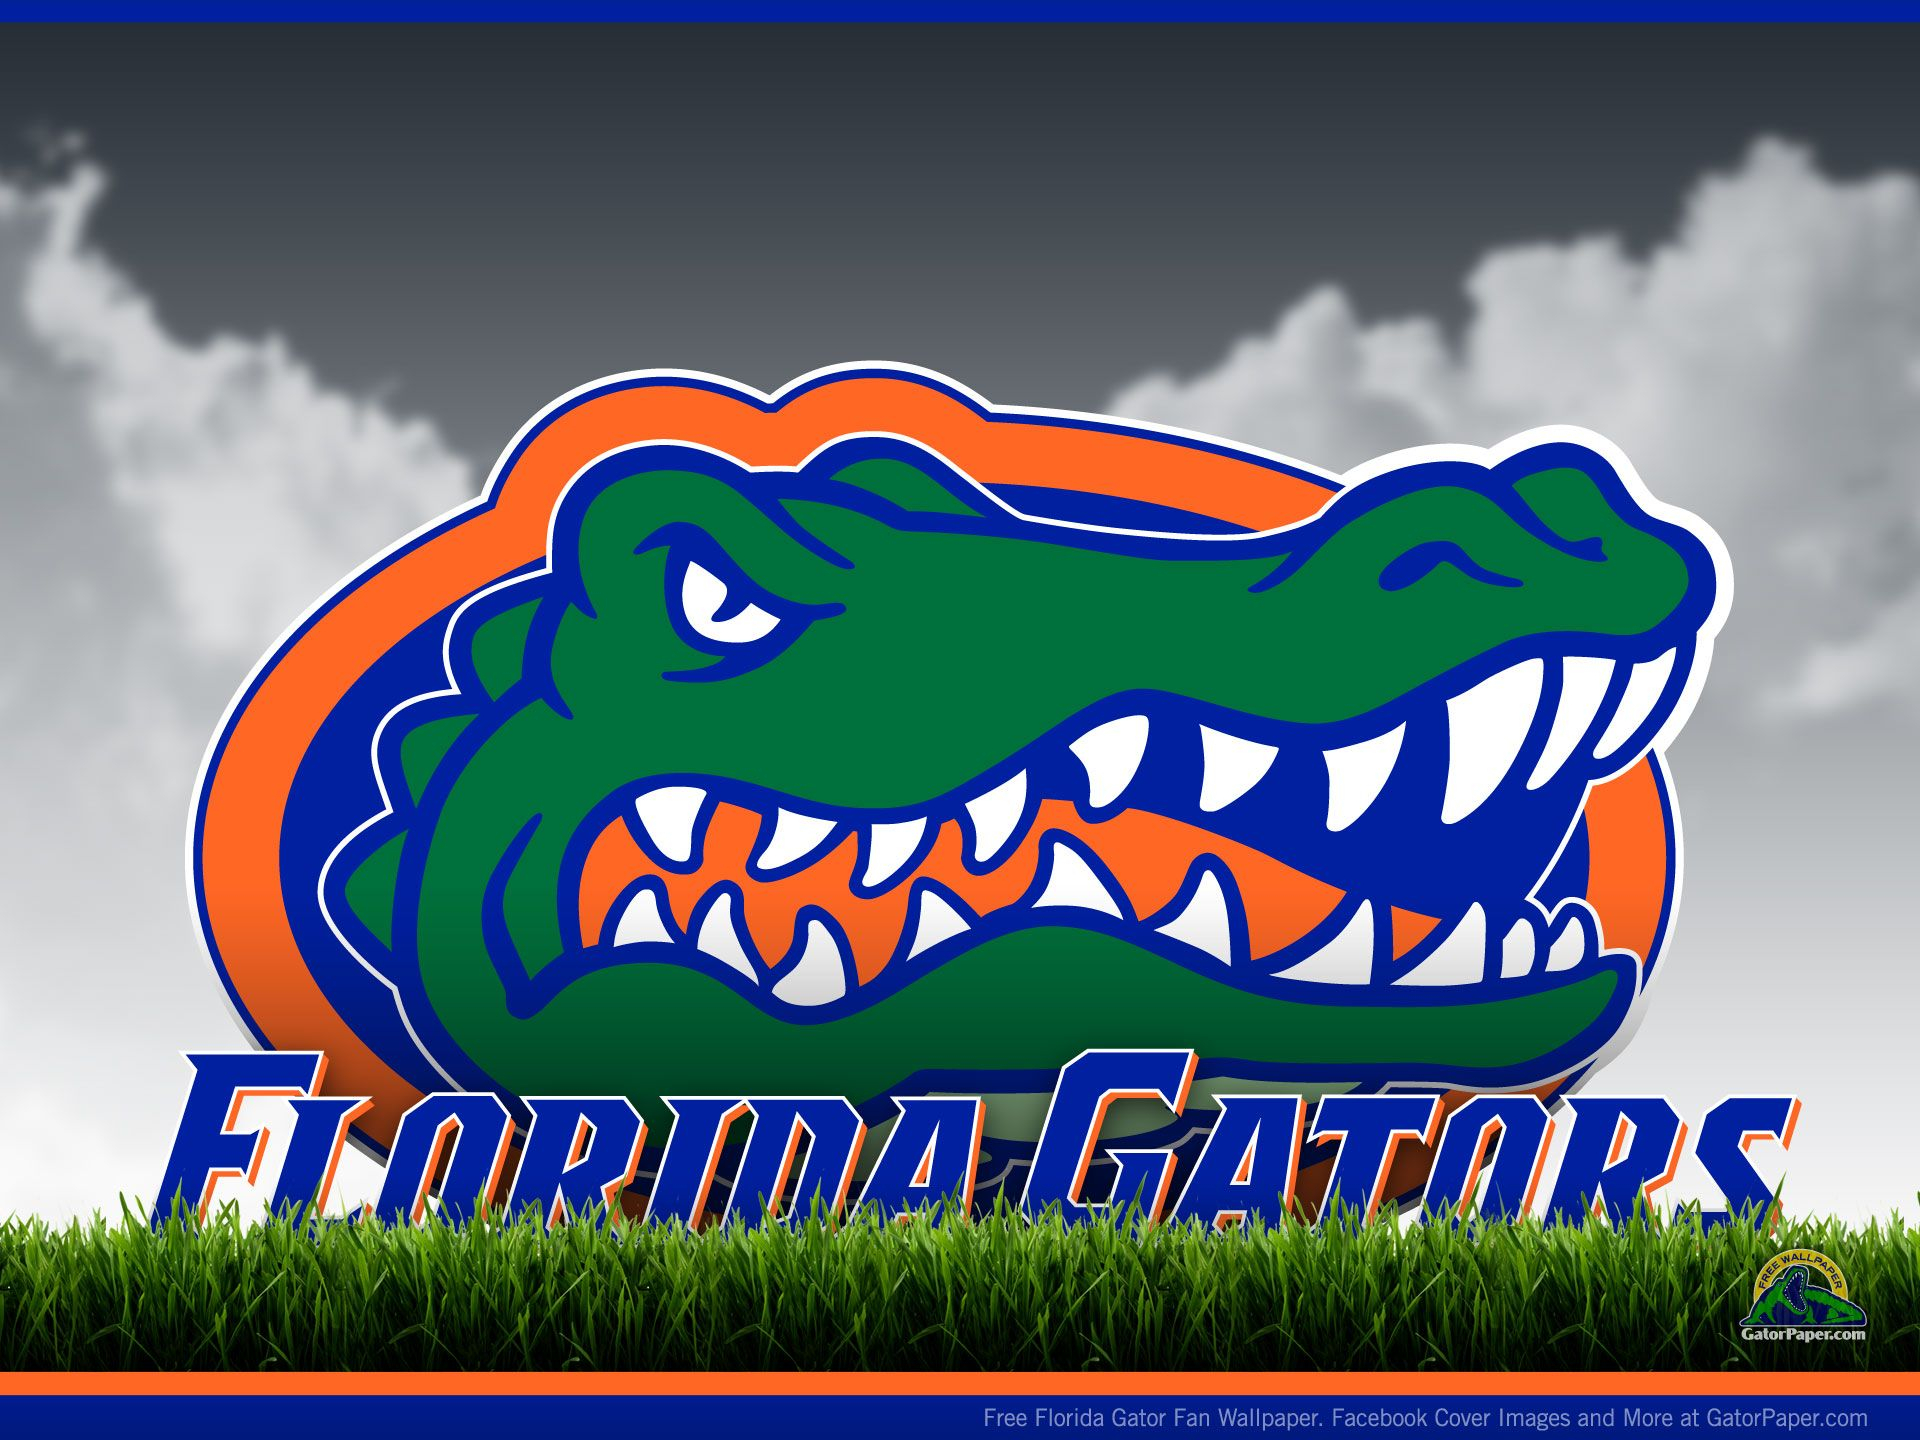 1920x1440 University of Florida Wallpaper GatorZone Bing Images | Florida gators football, Florida gators, Florida gators wallpaper